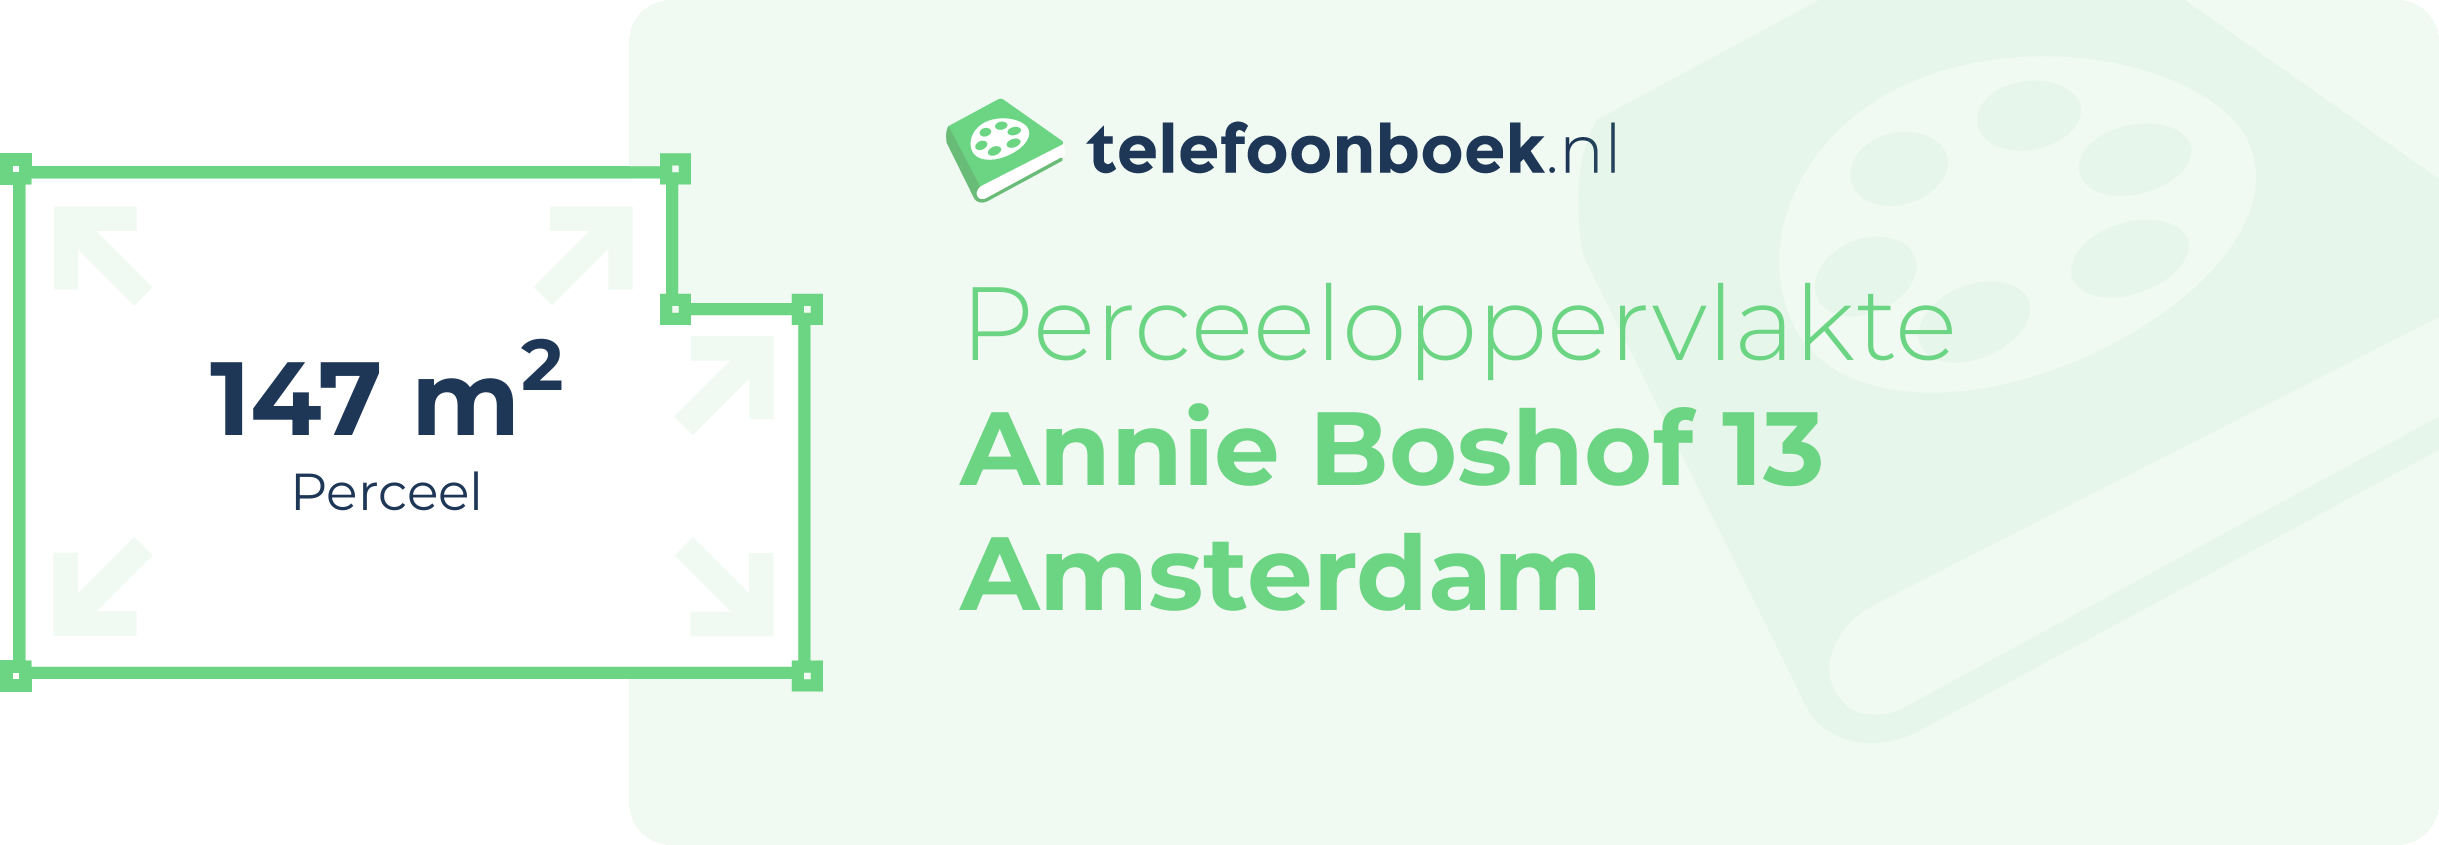 Perceeloppervlakte Annie Boshof 13 Amsterdam